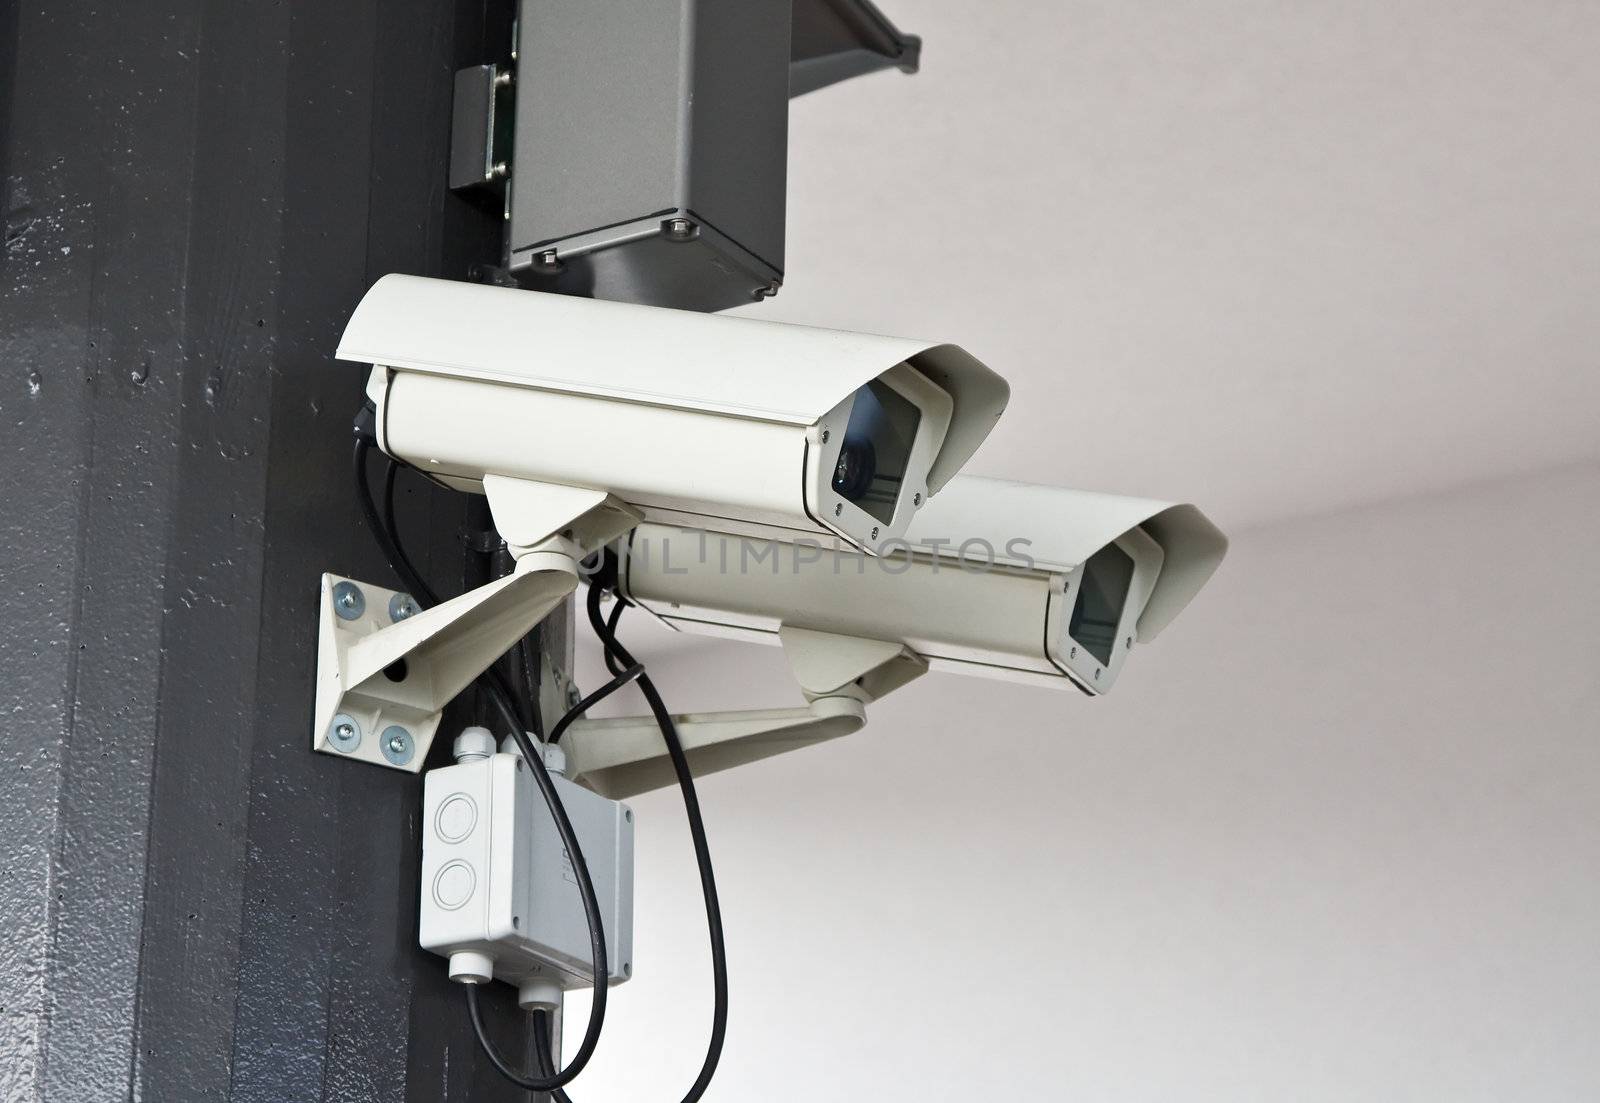 Outdoor surveillance cameras by swisshippo